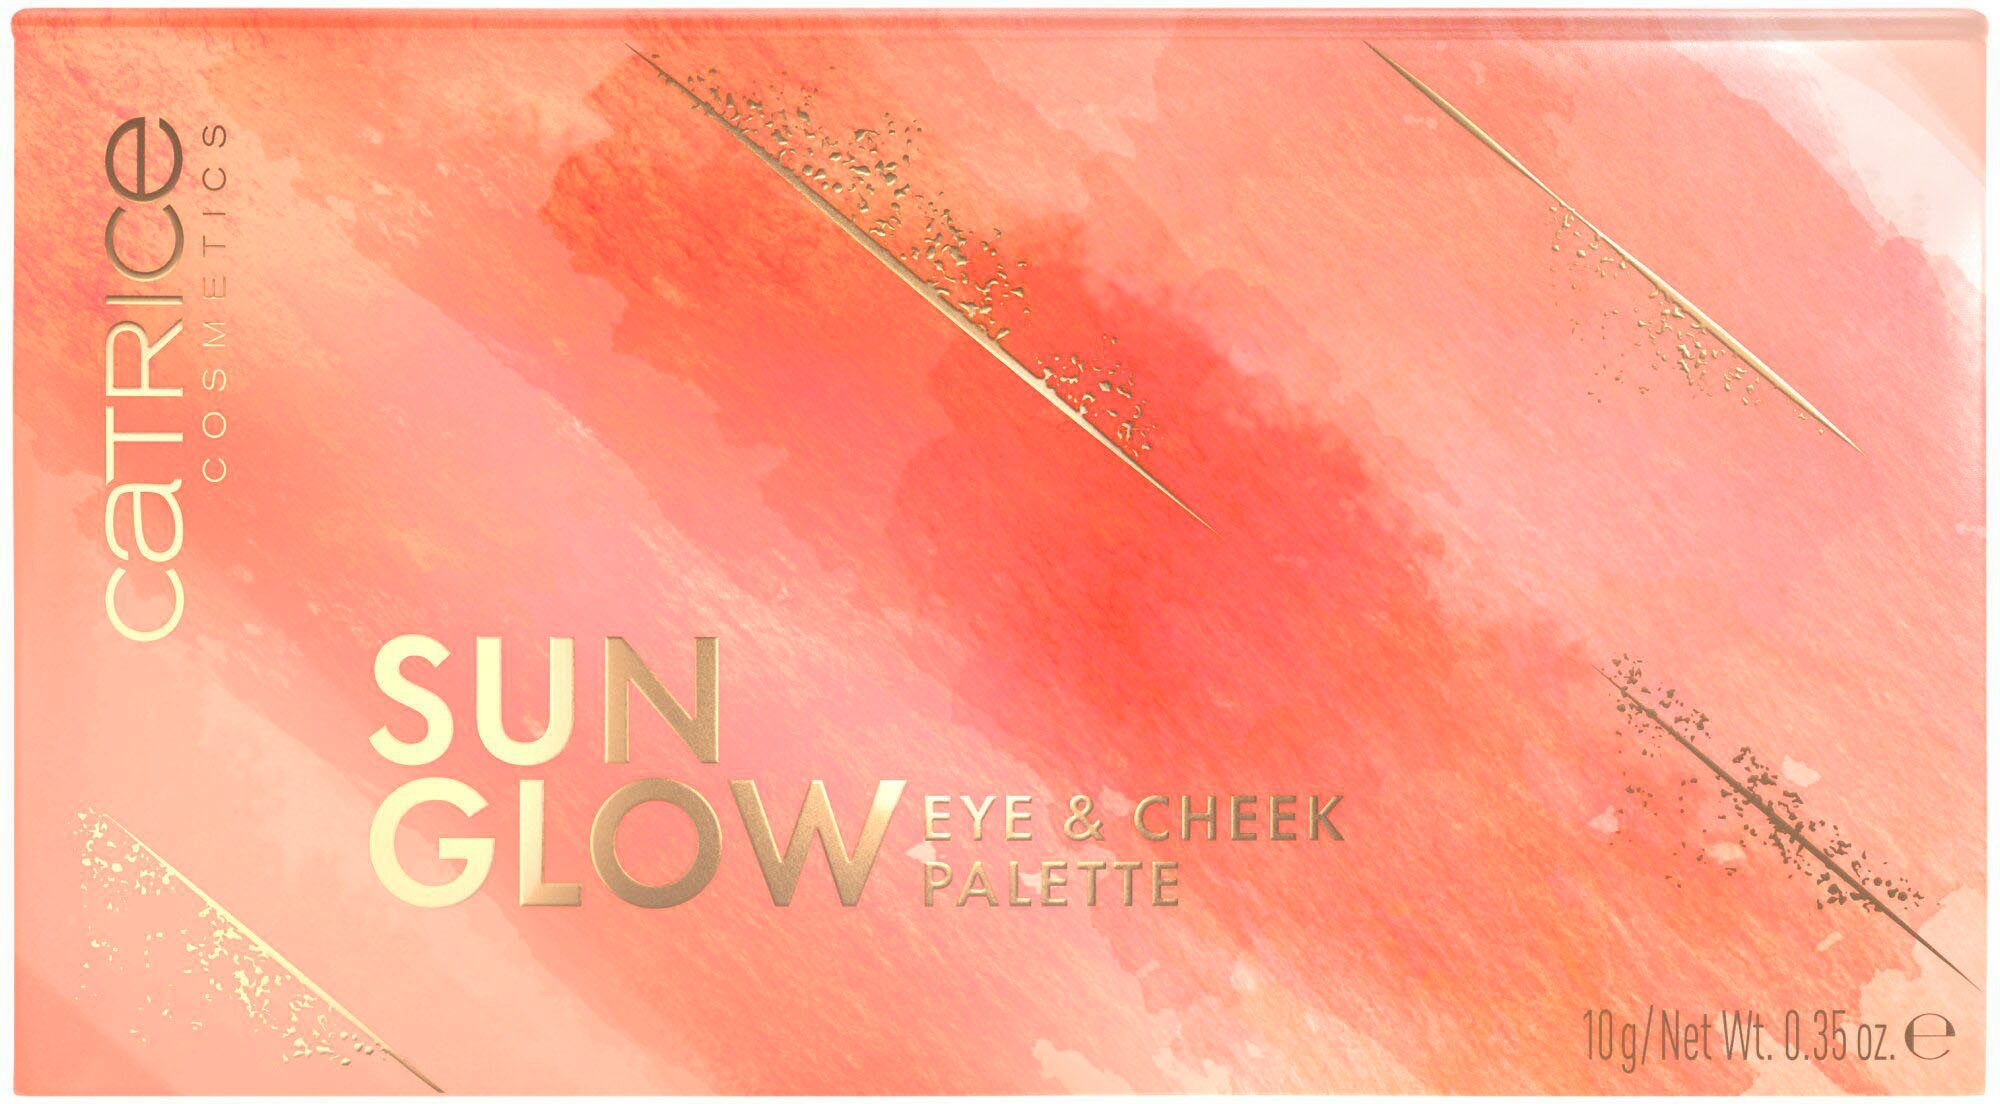 Catrice Rouge-Palette Cheek Eye & Palette